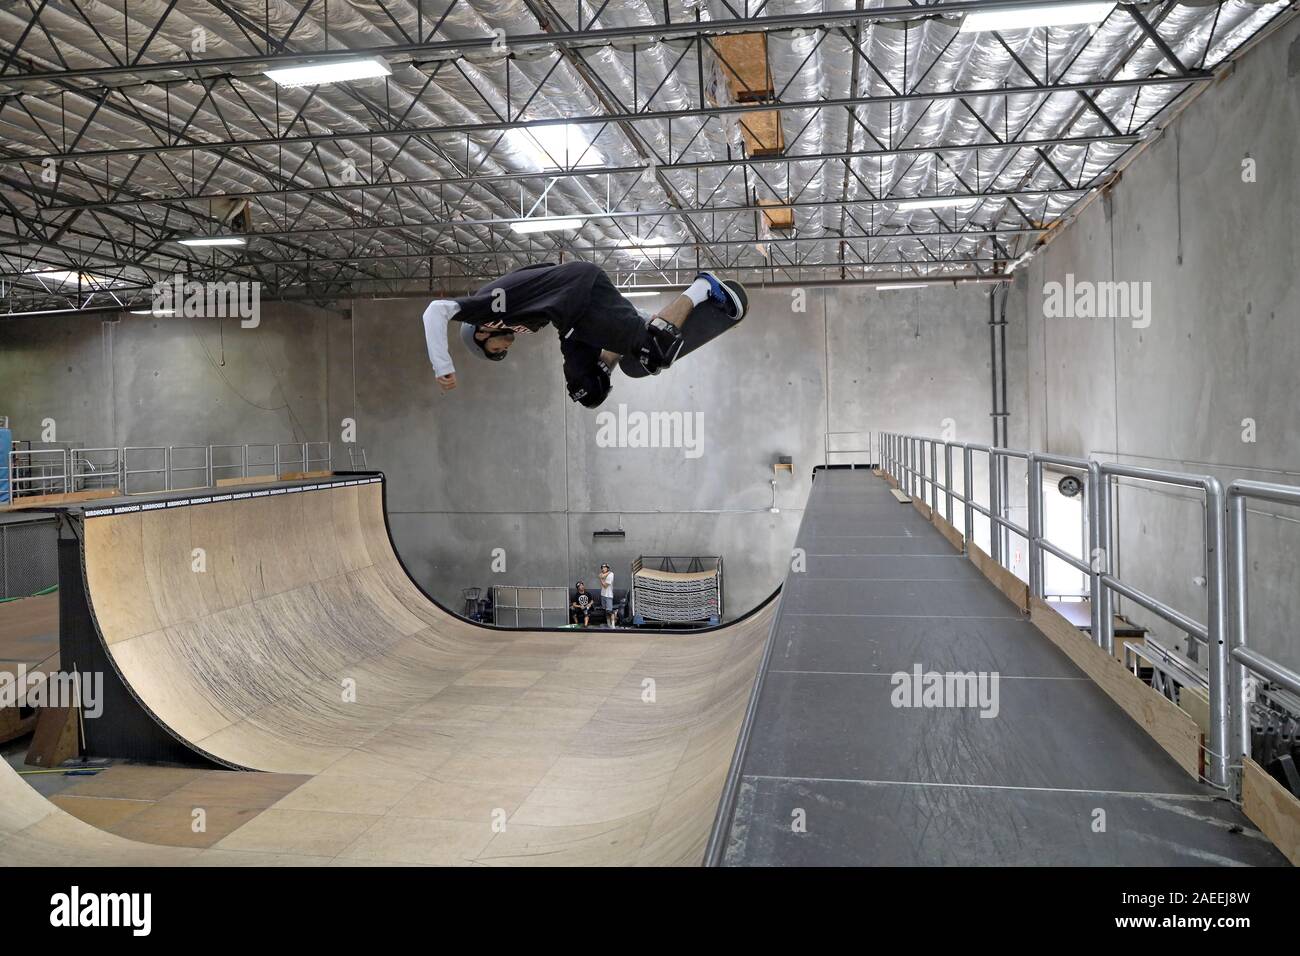 Pro Skaters practice at the Birdhouse Skate warehouse Stock Photo - Alamy